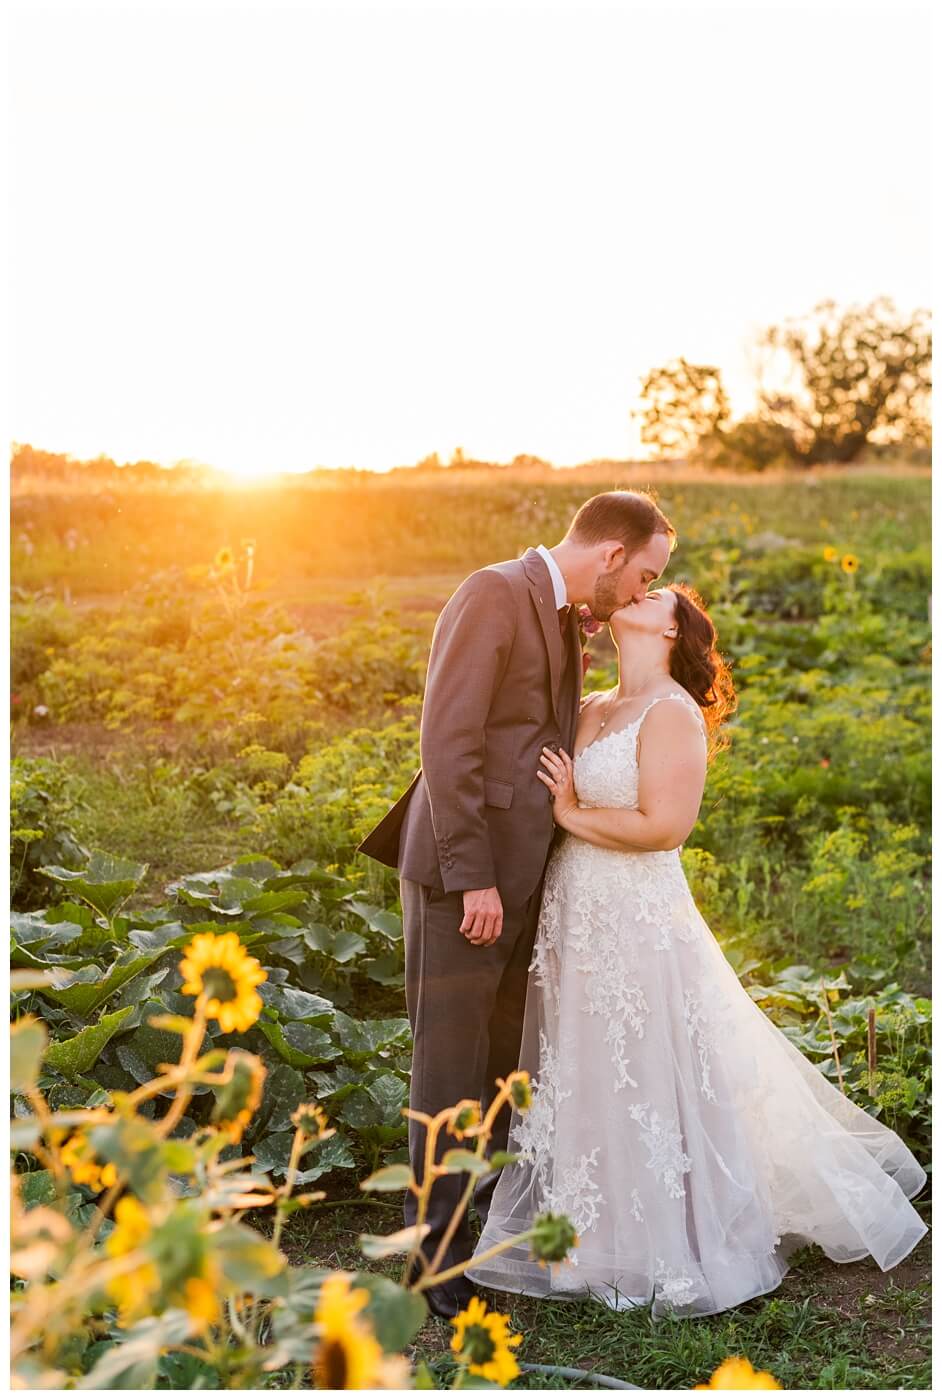 Andrew & Alisha - Regina Wedding Photography - 40 - Bride & Groom kiss amongst sunflowers at sunset